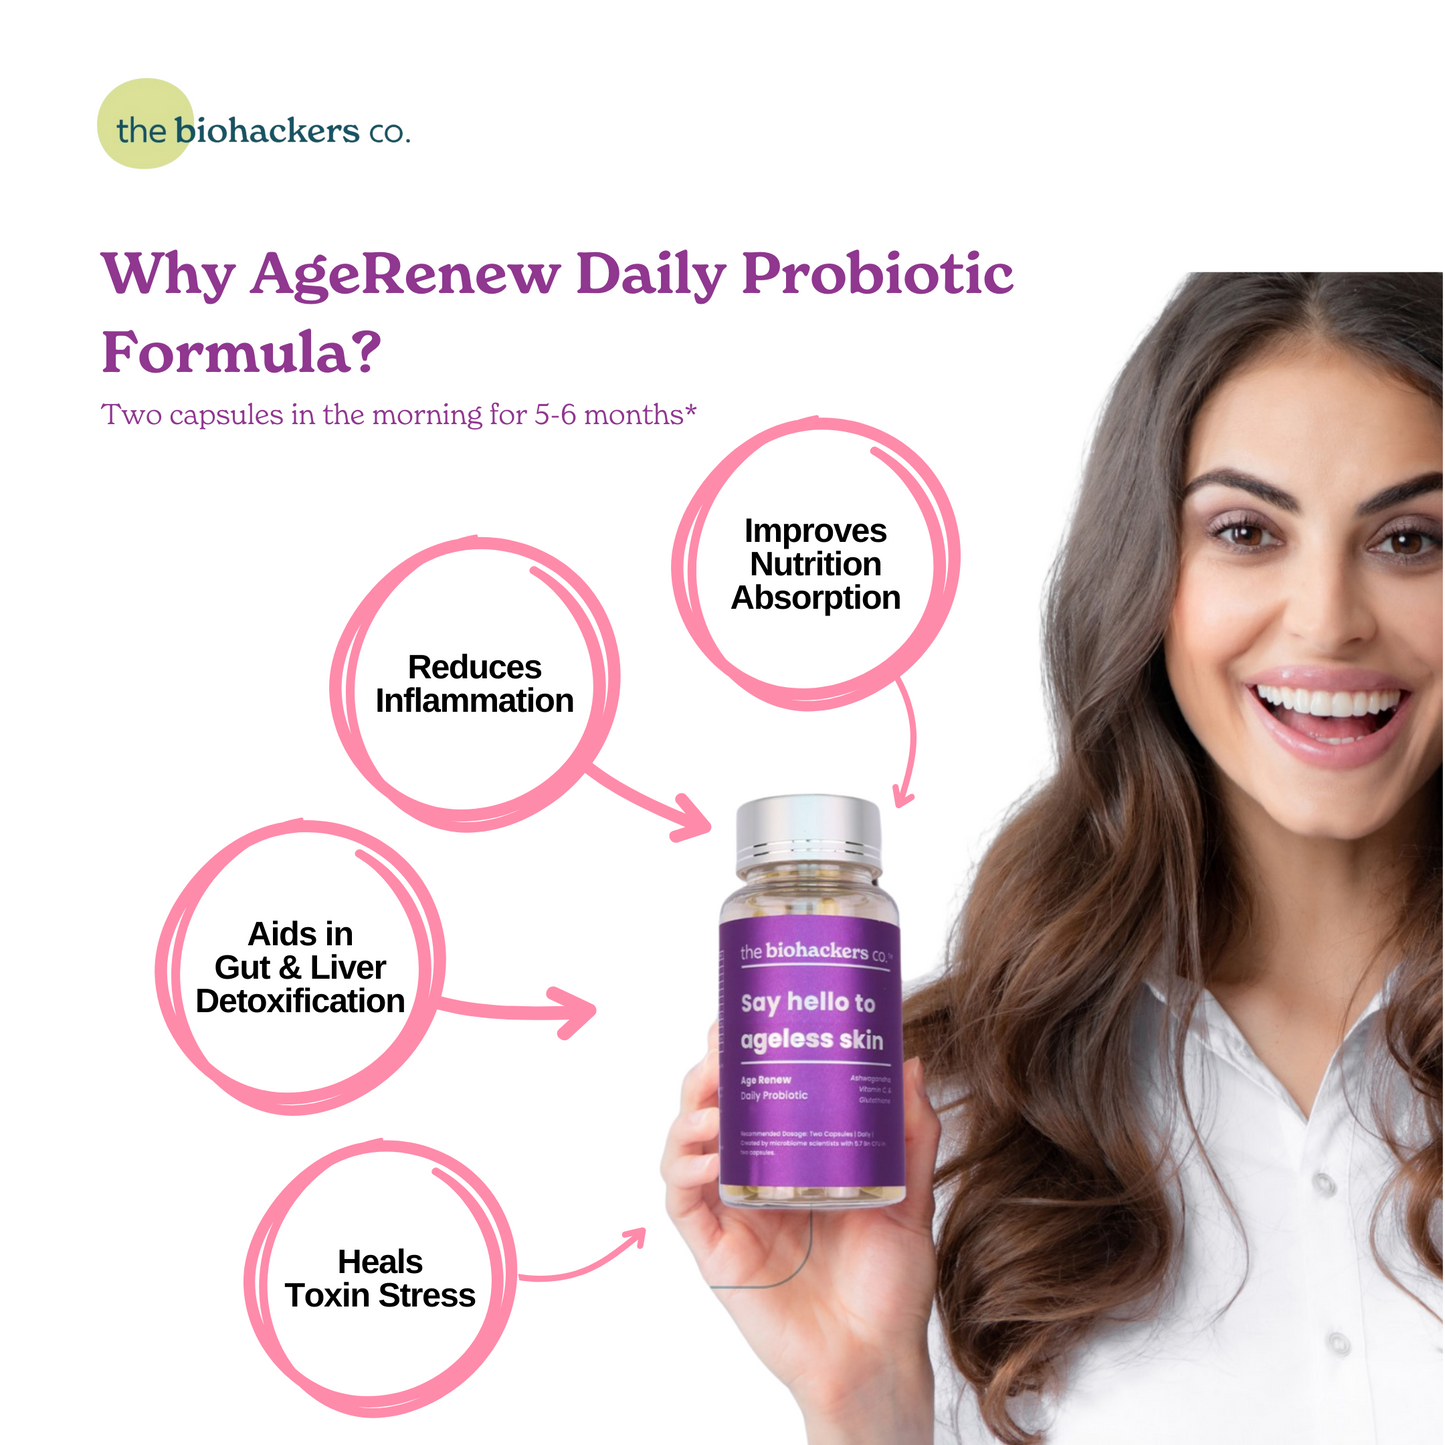 Age Renew Daily Probiotic